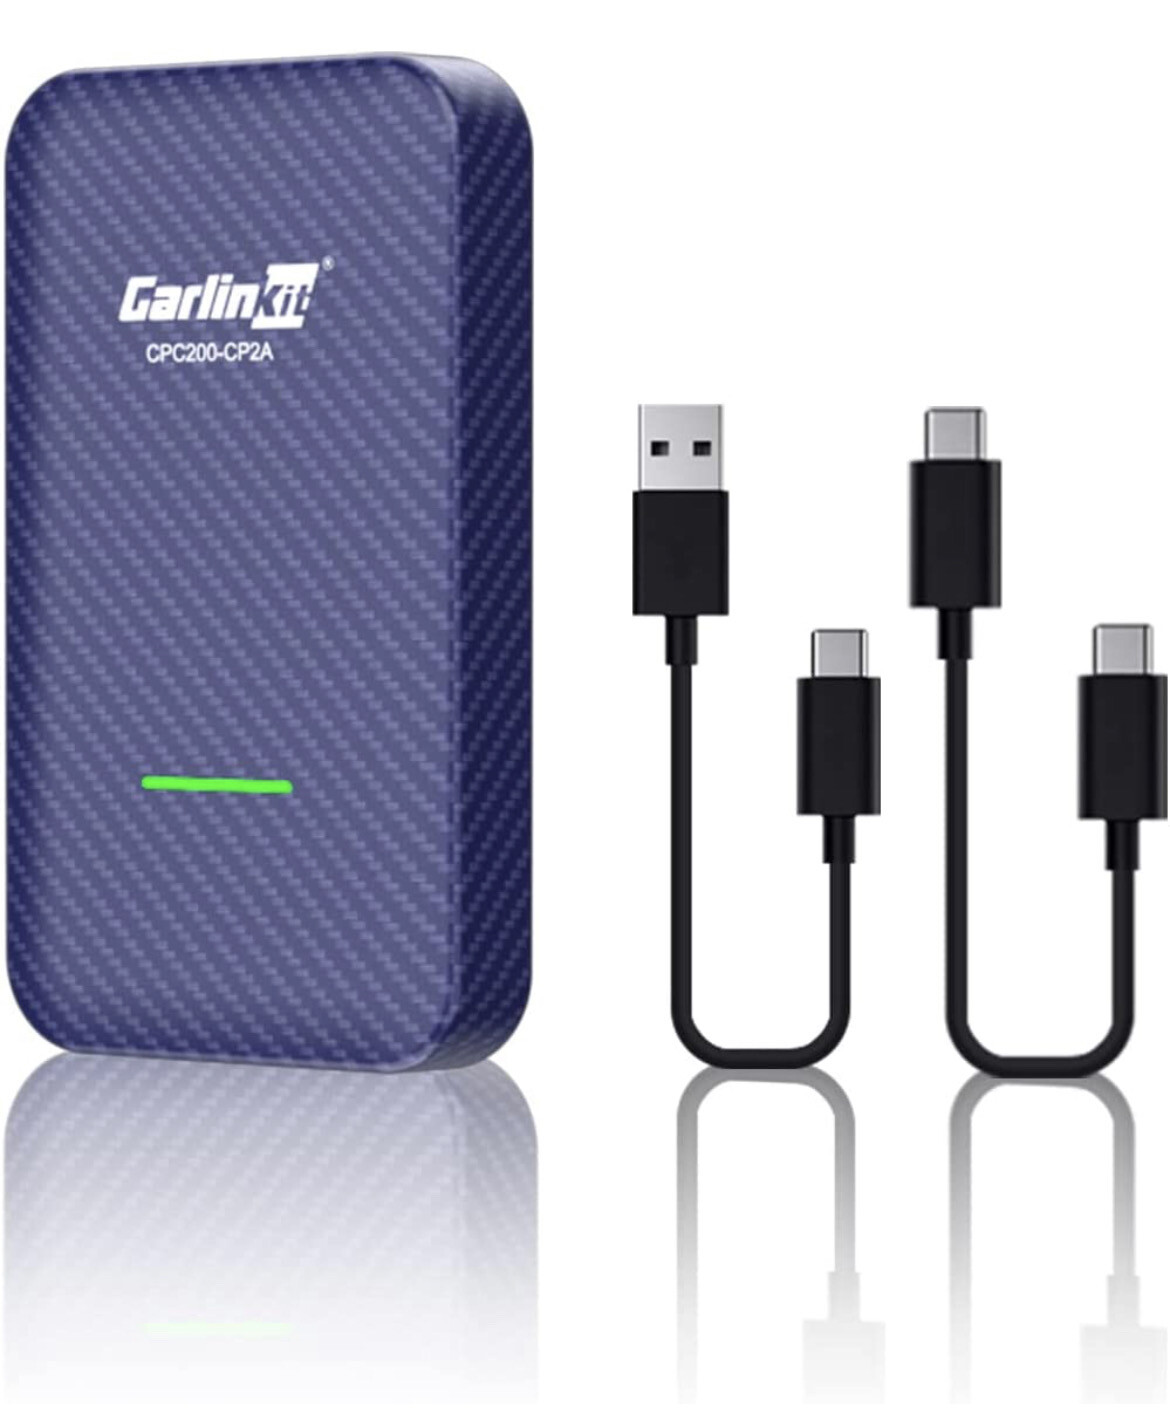 CarlinKit Wireless 4.0 Apple CarPlay / Android Auto Adapter